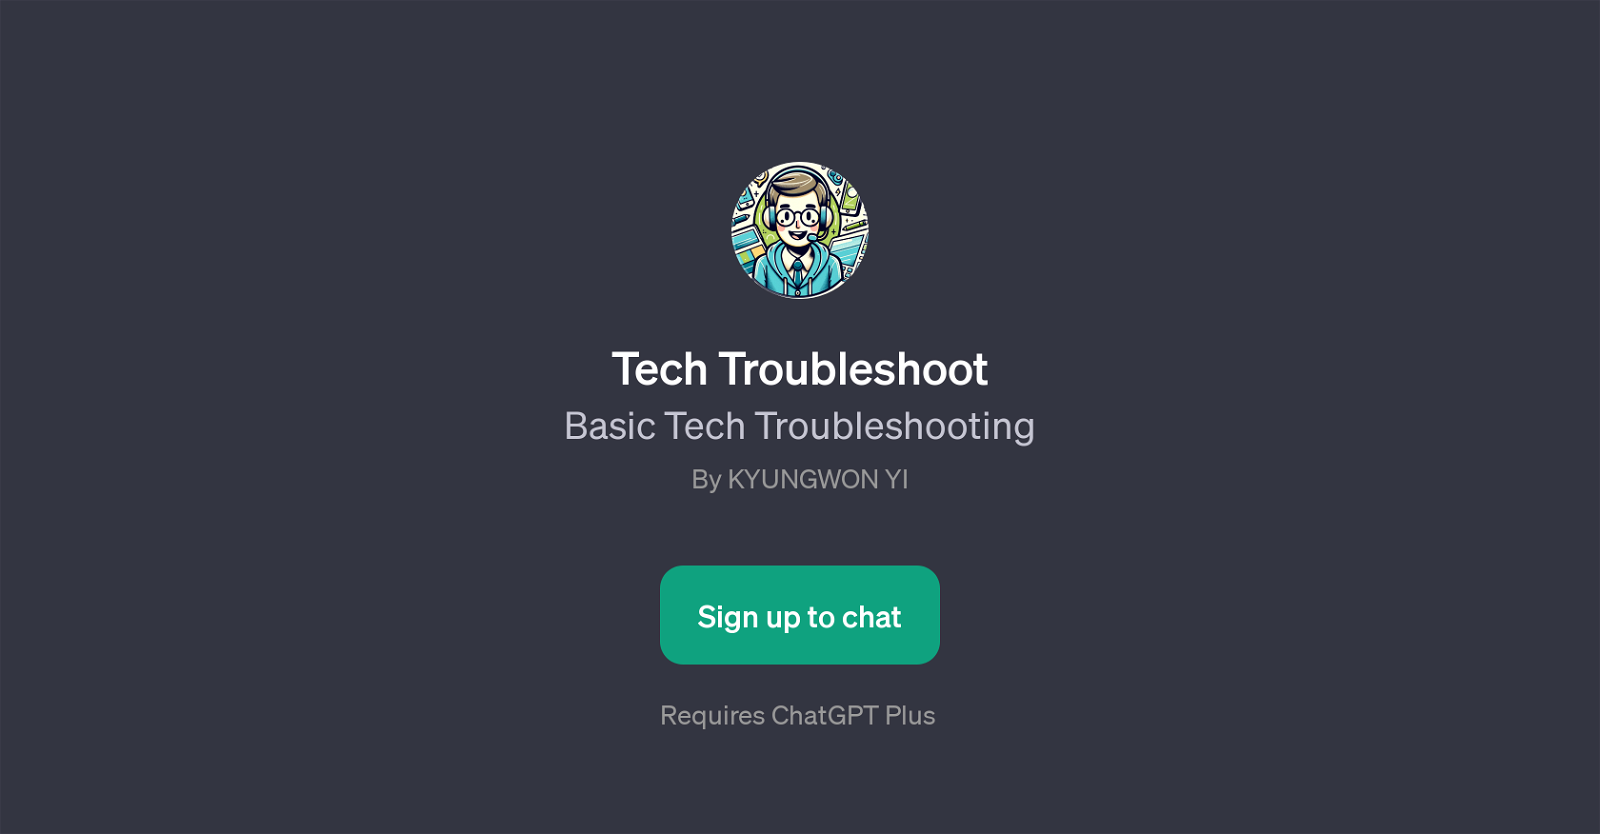 Tech Troubleshoot website